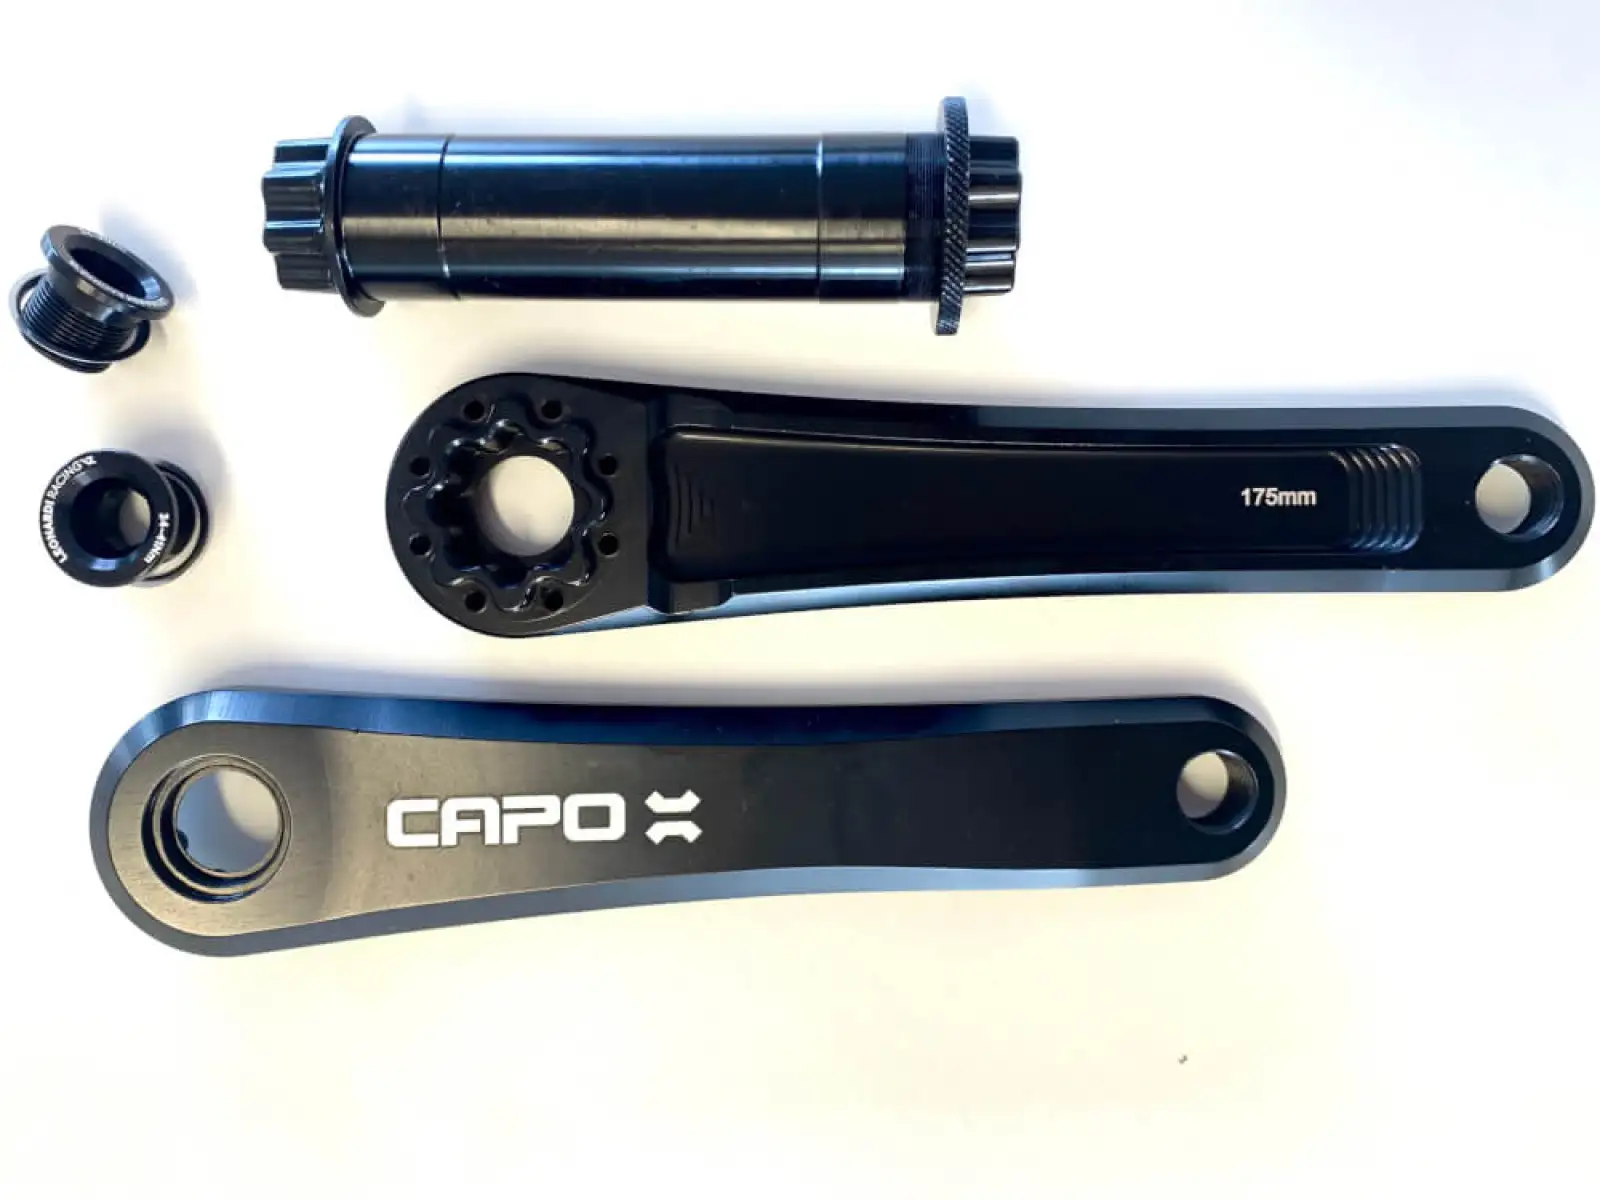 Leonardi Racing Capo 8-ramenné kľuky pre Quarq 175mm